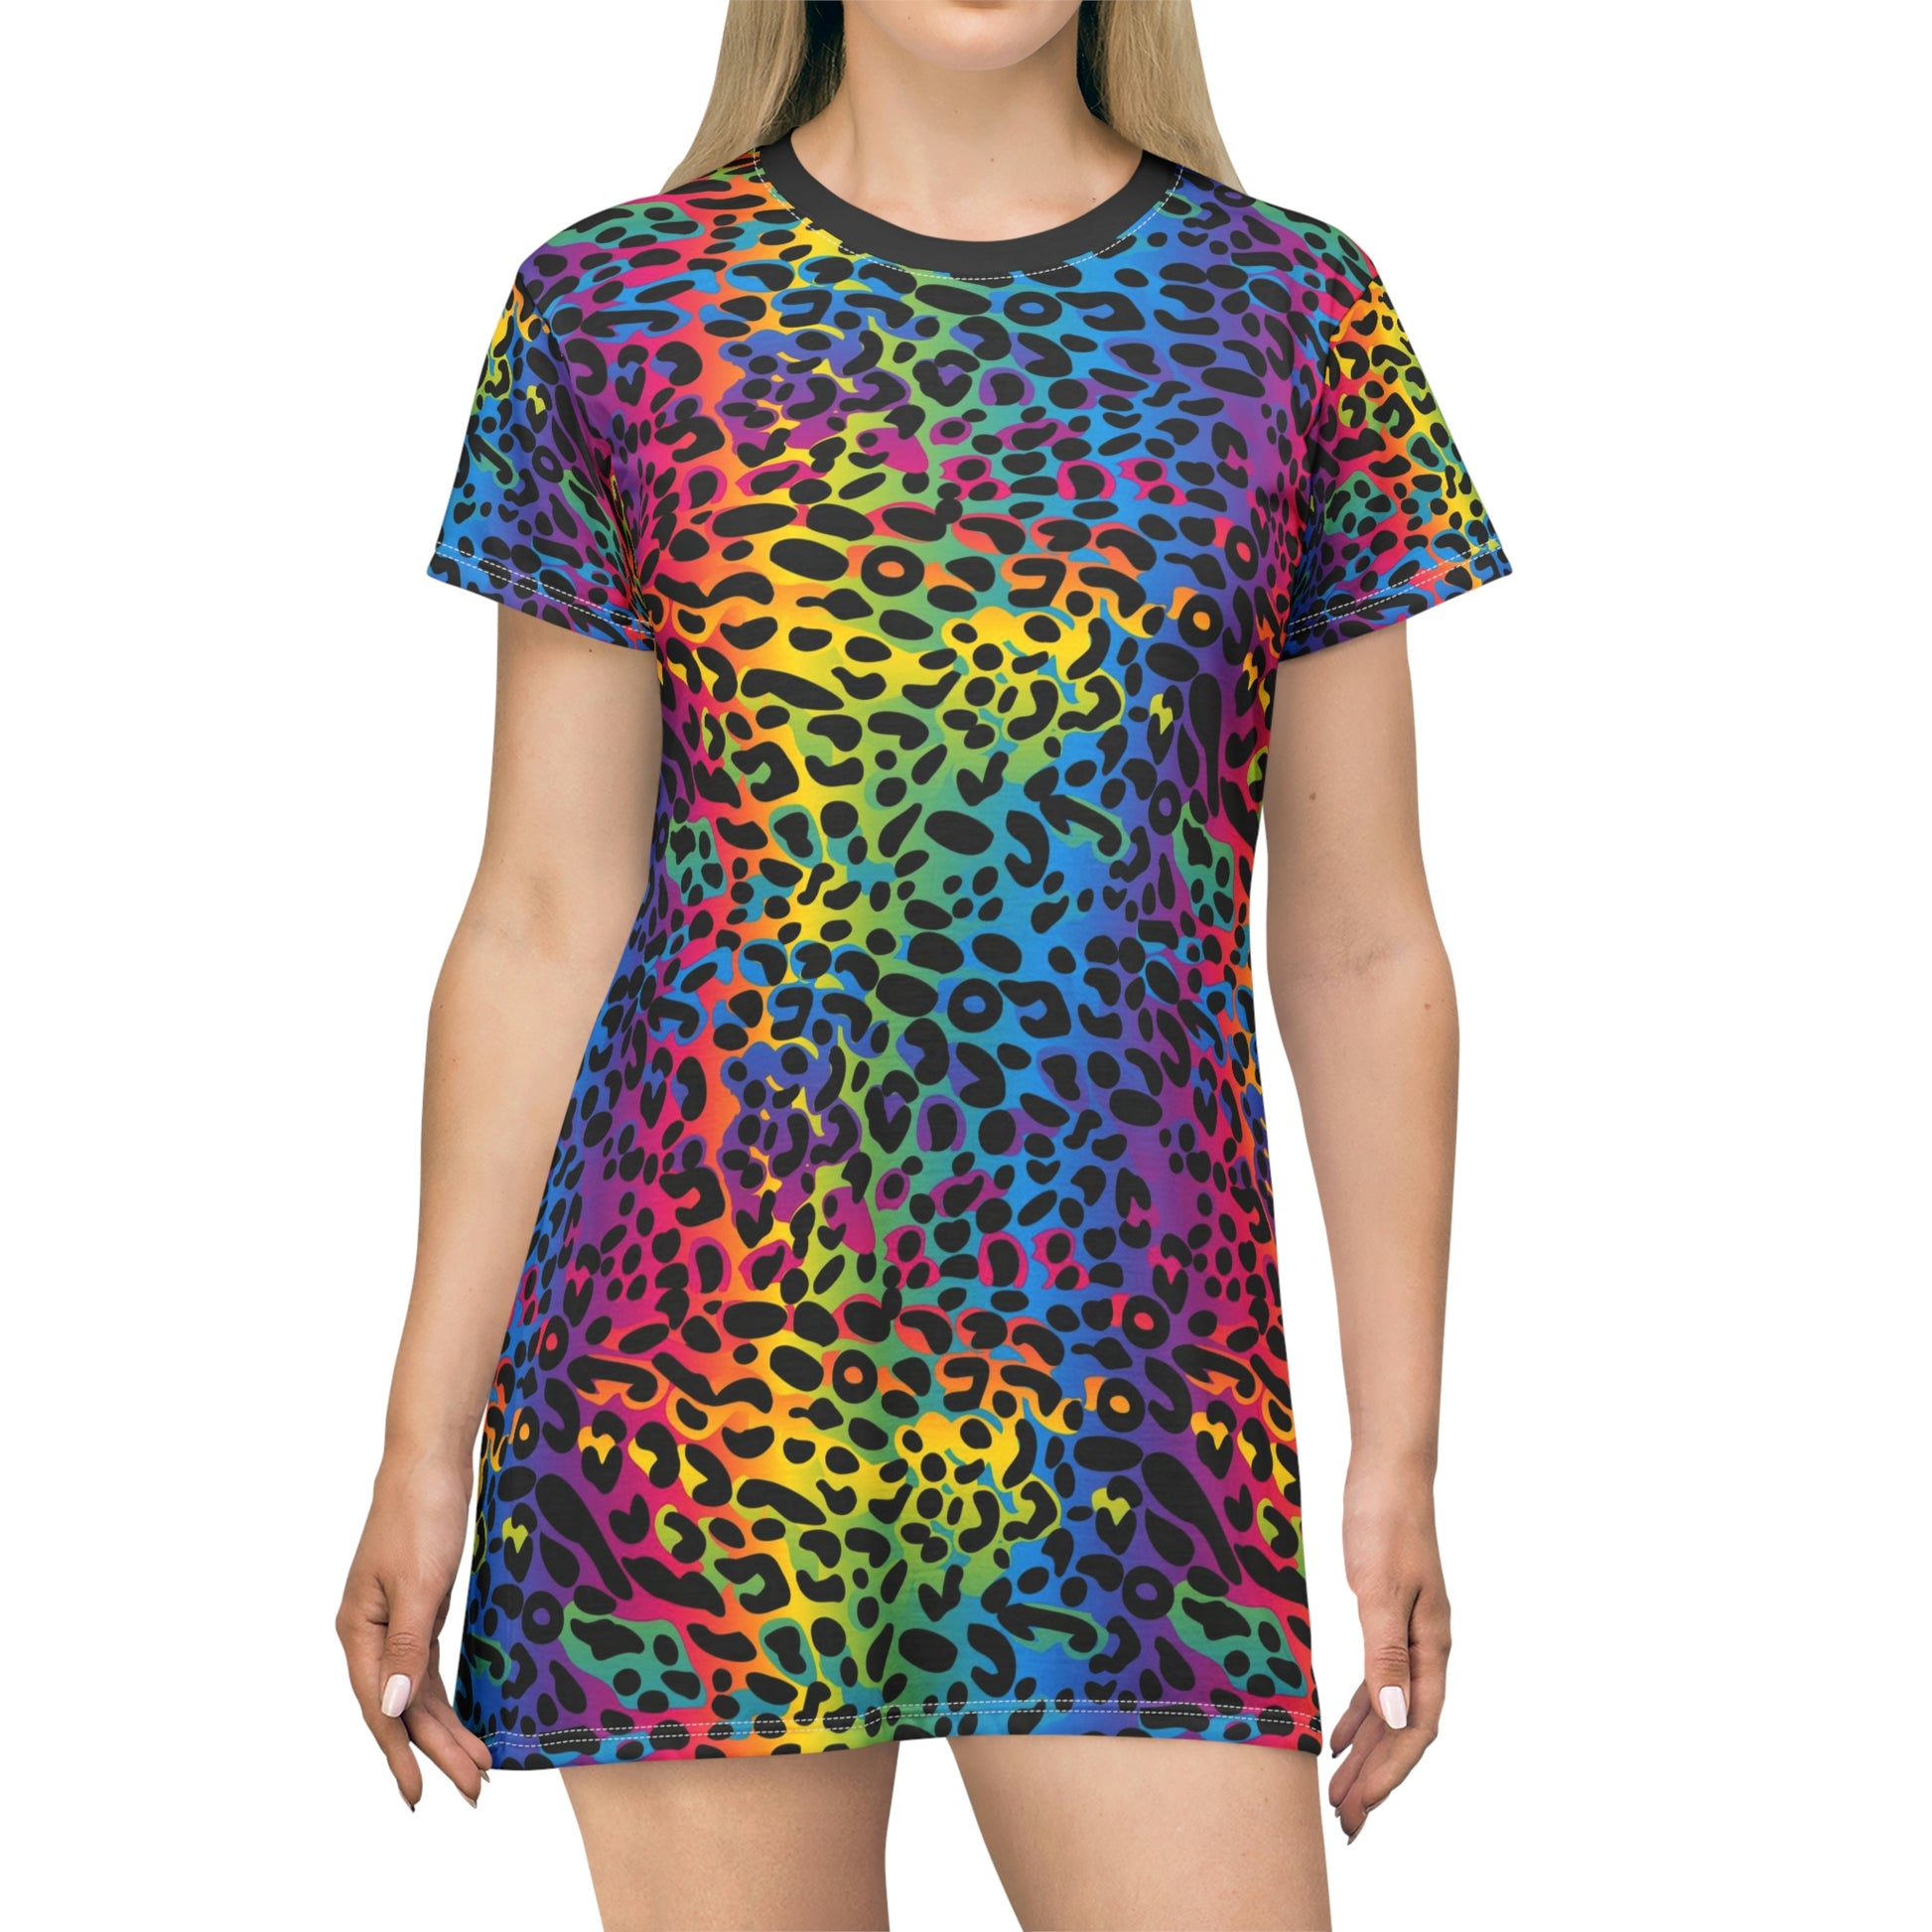 Rainbow Leopard Tshirt Dress, Animal Print Women Summer Beach Cute Festival Party Casual Short Sleeve Girls Ladies Tee Starcove Fashion